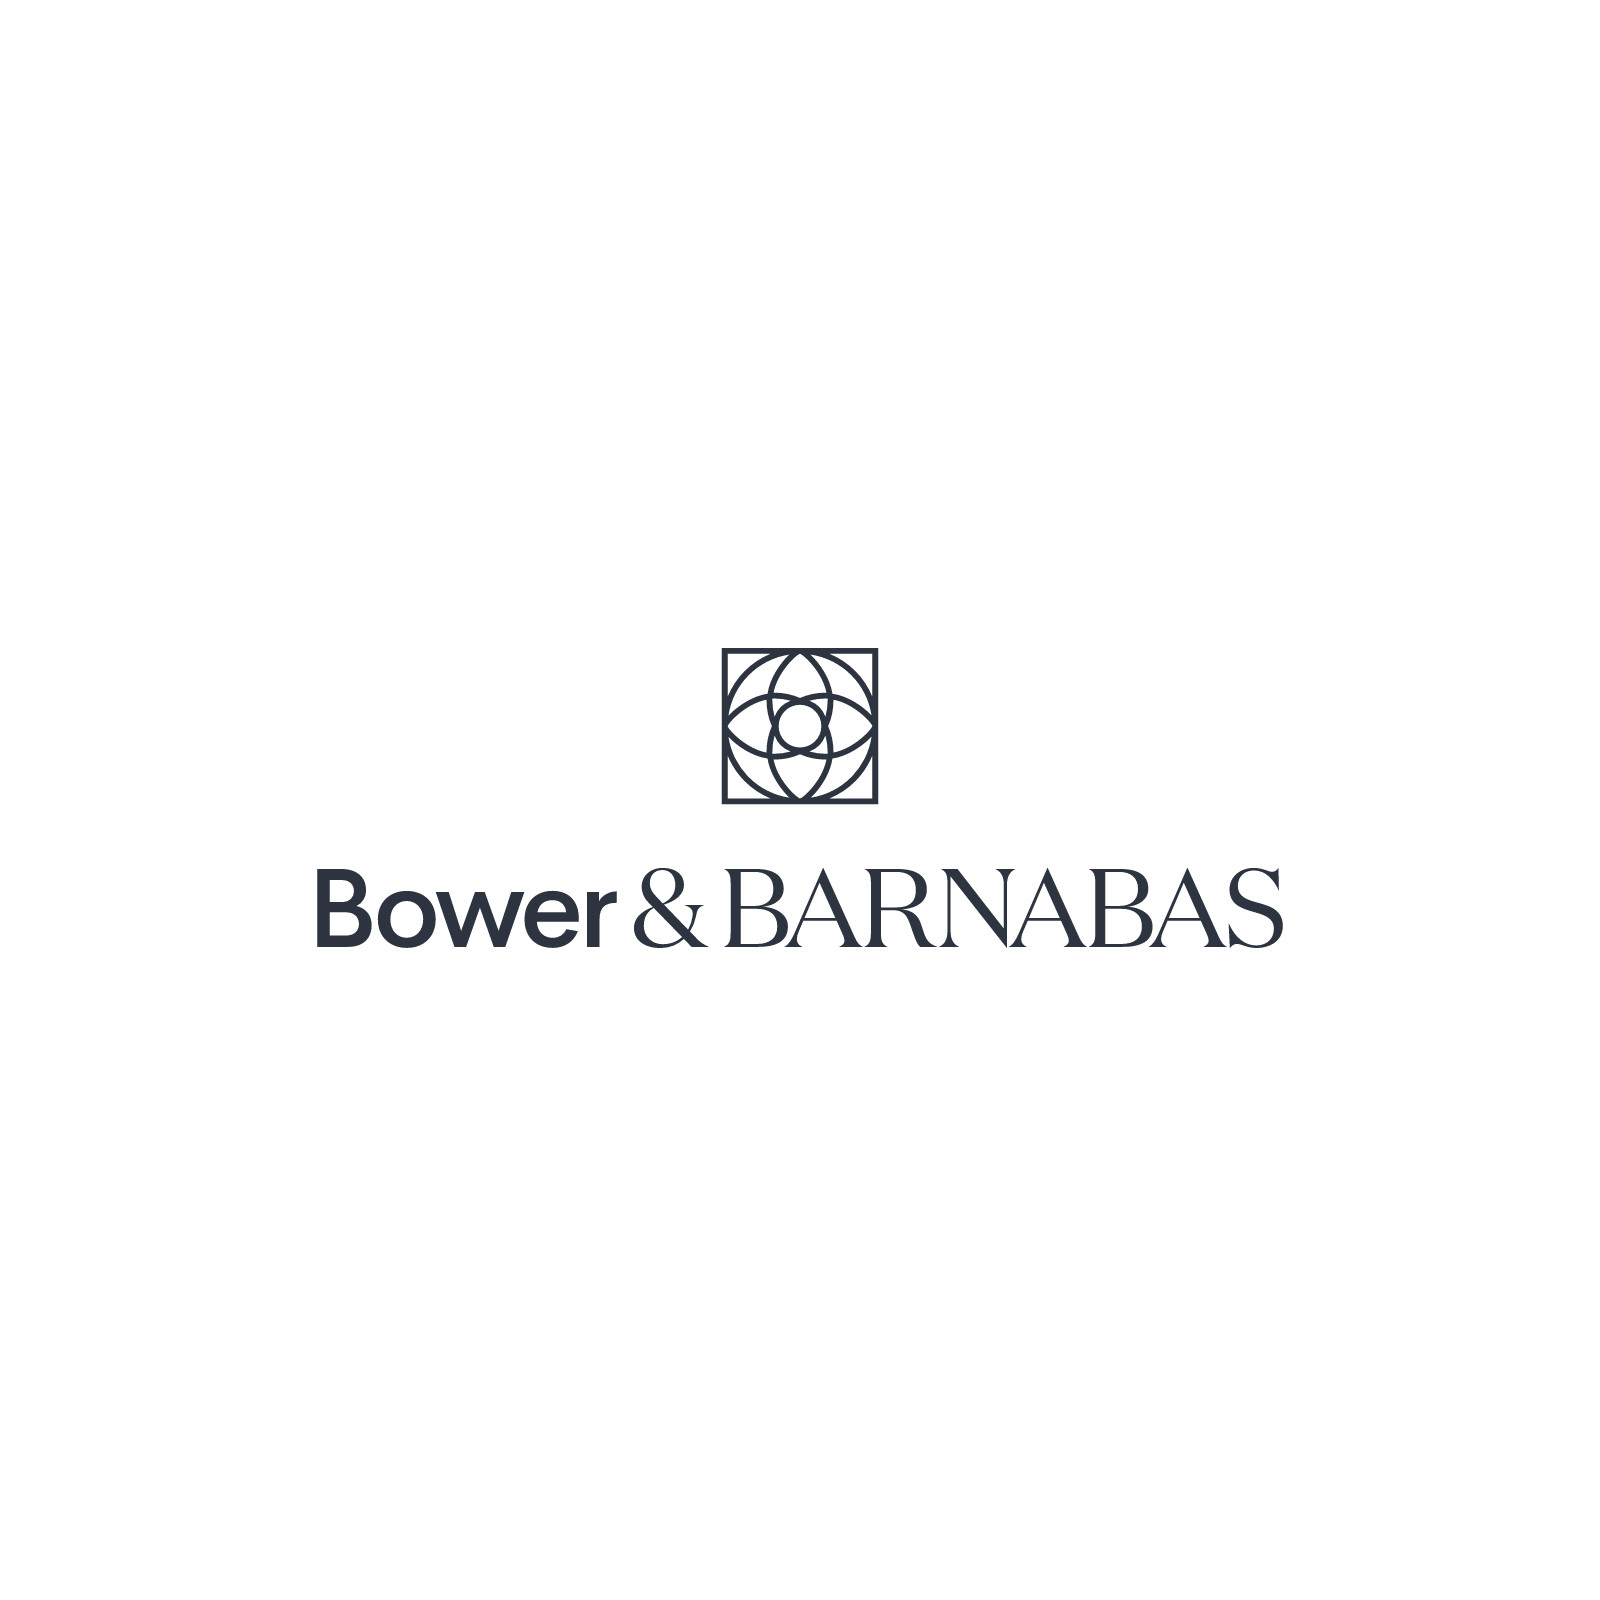 Bower & Barnabas - Building - Woodside Park, London N12